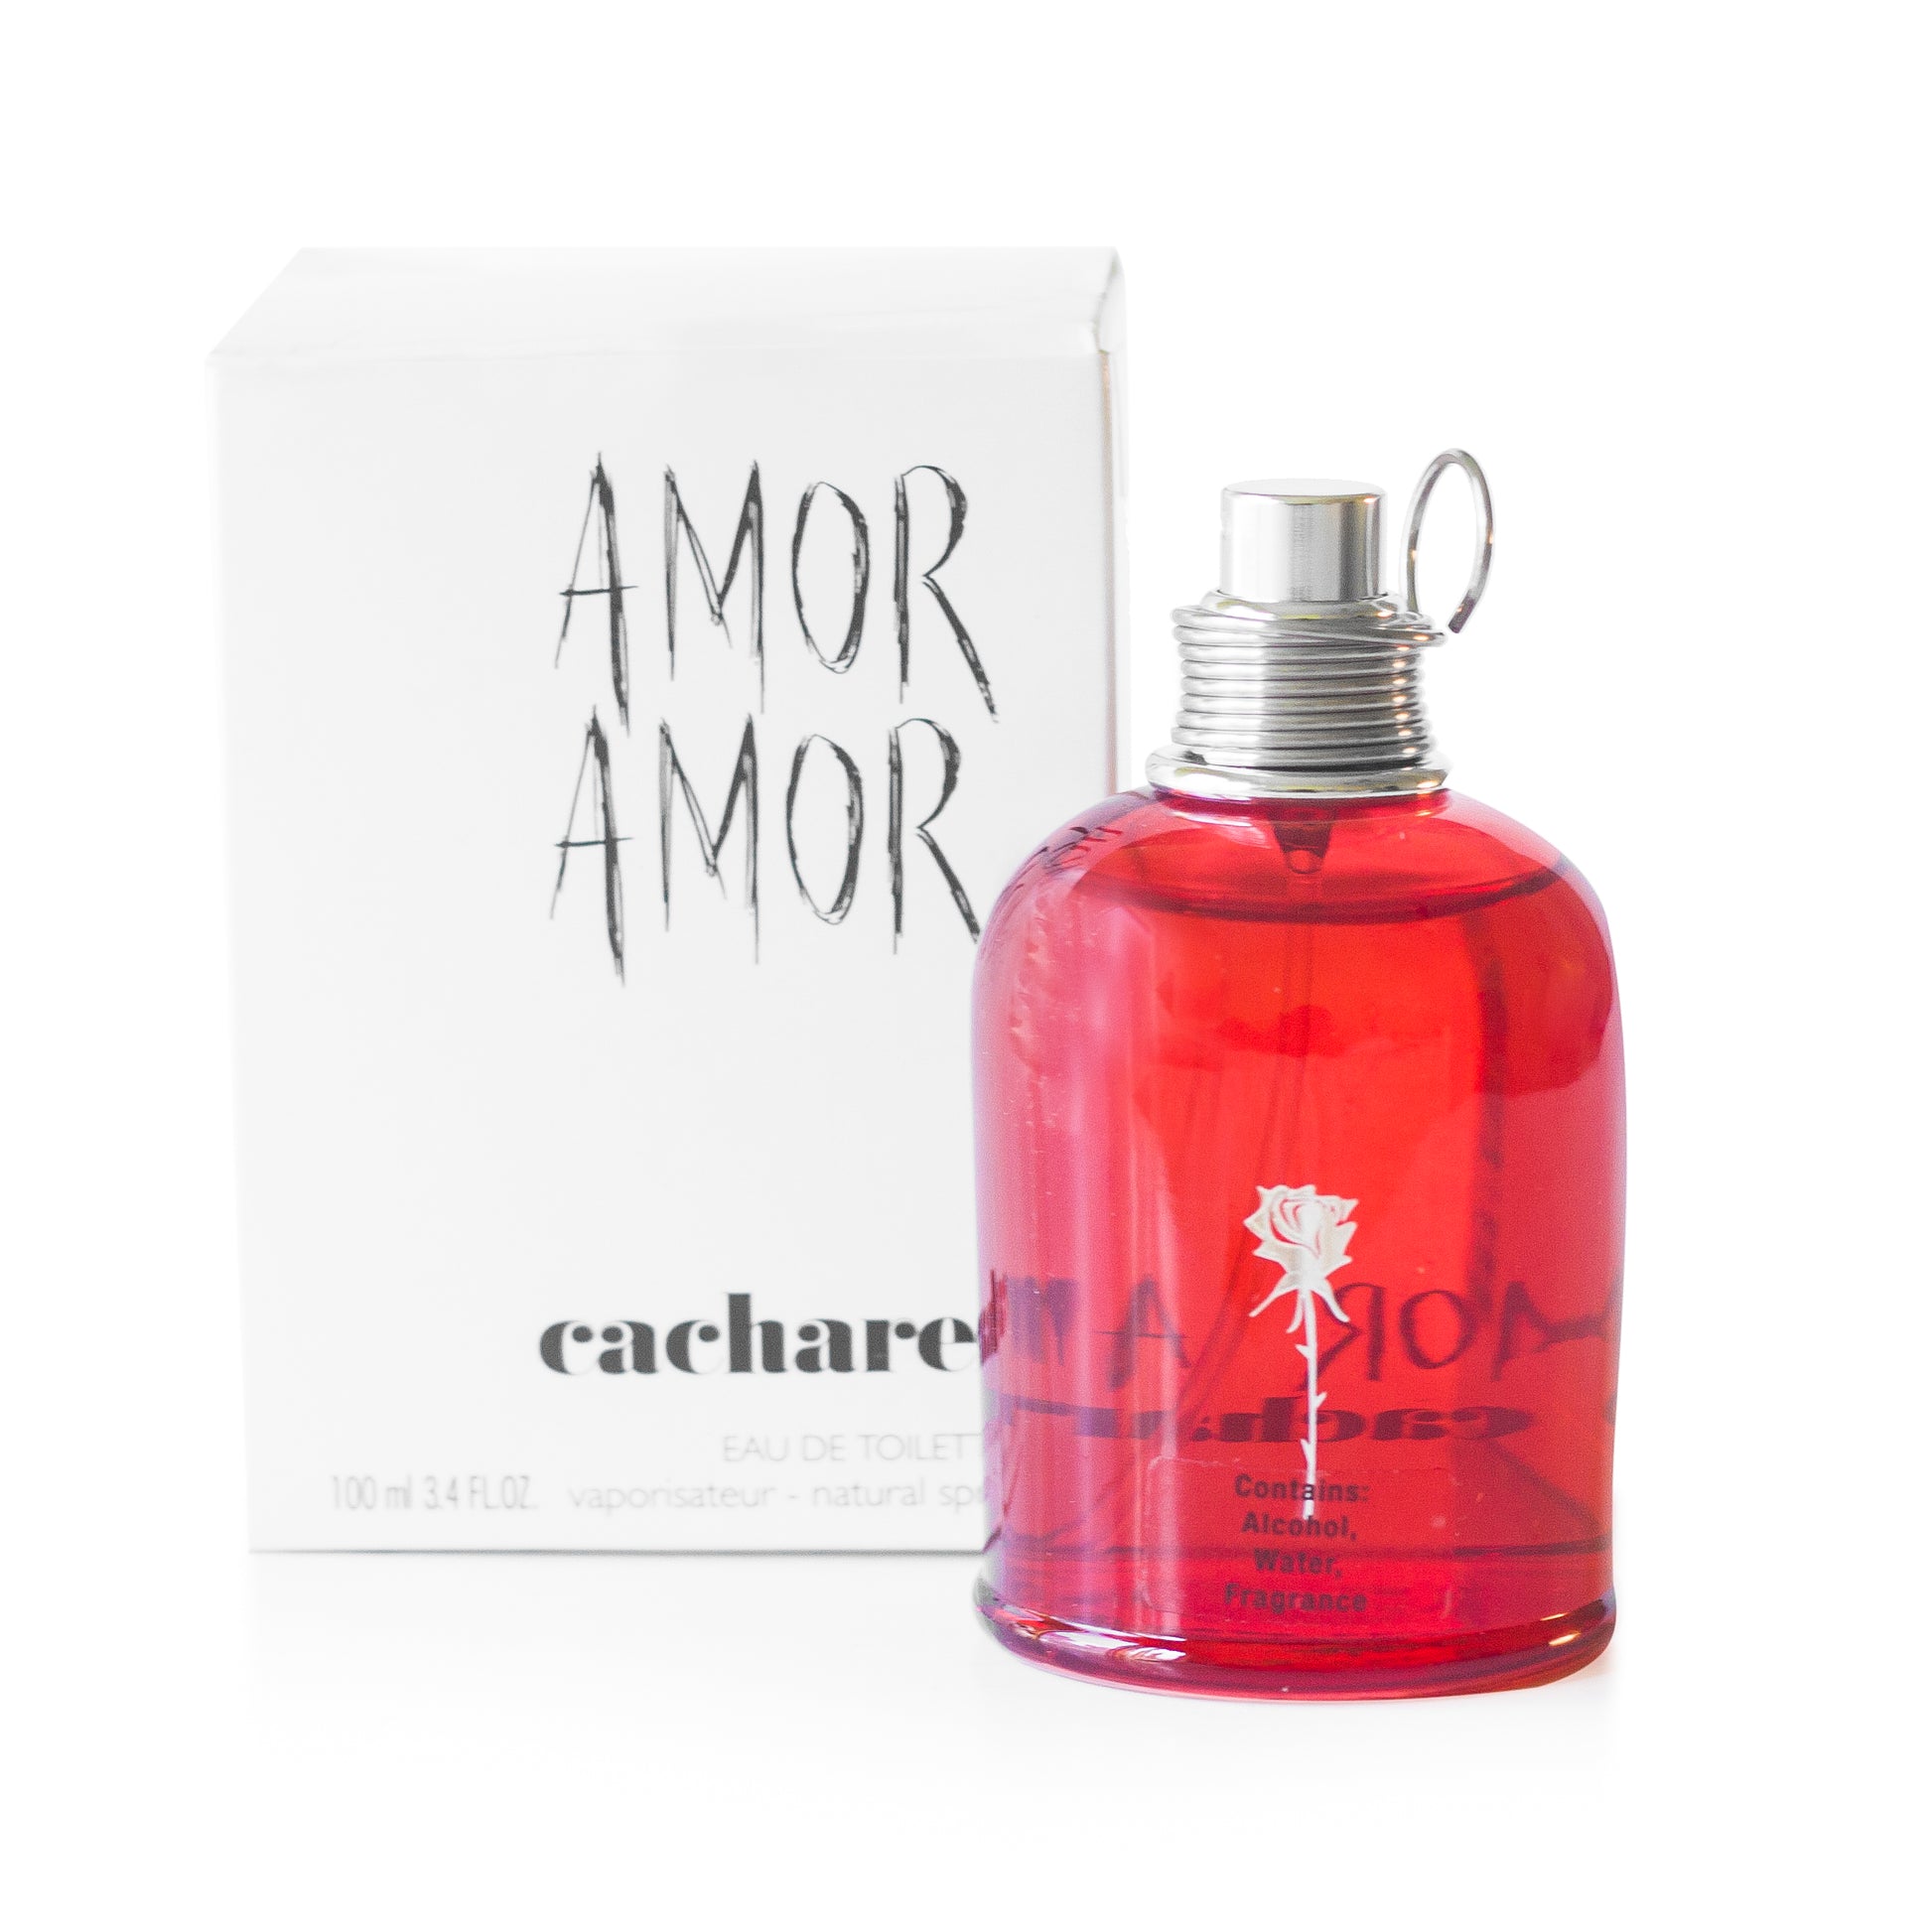 Amor Amor Eau de Toilette Spray for Women by Cacharel 3.4 oz. Tester Click to open in modal